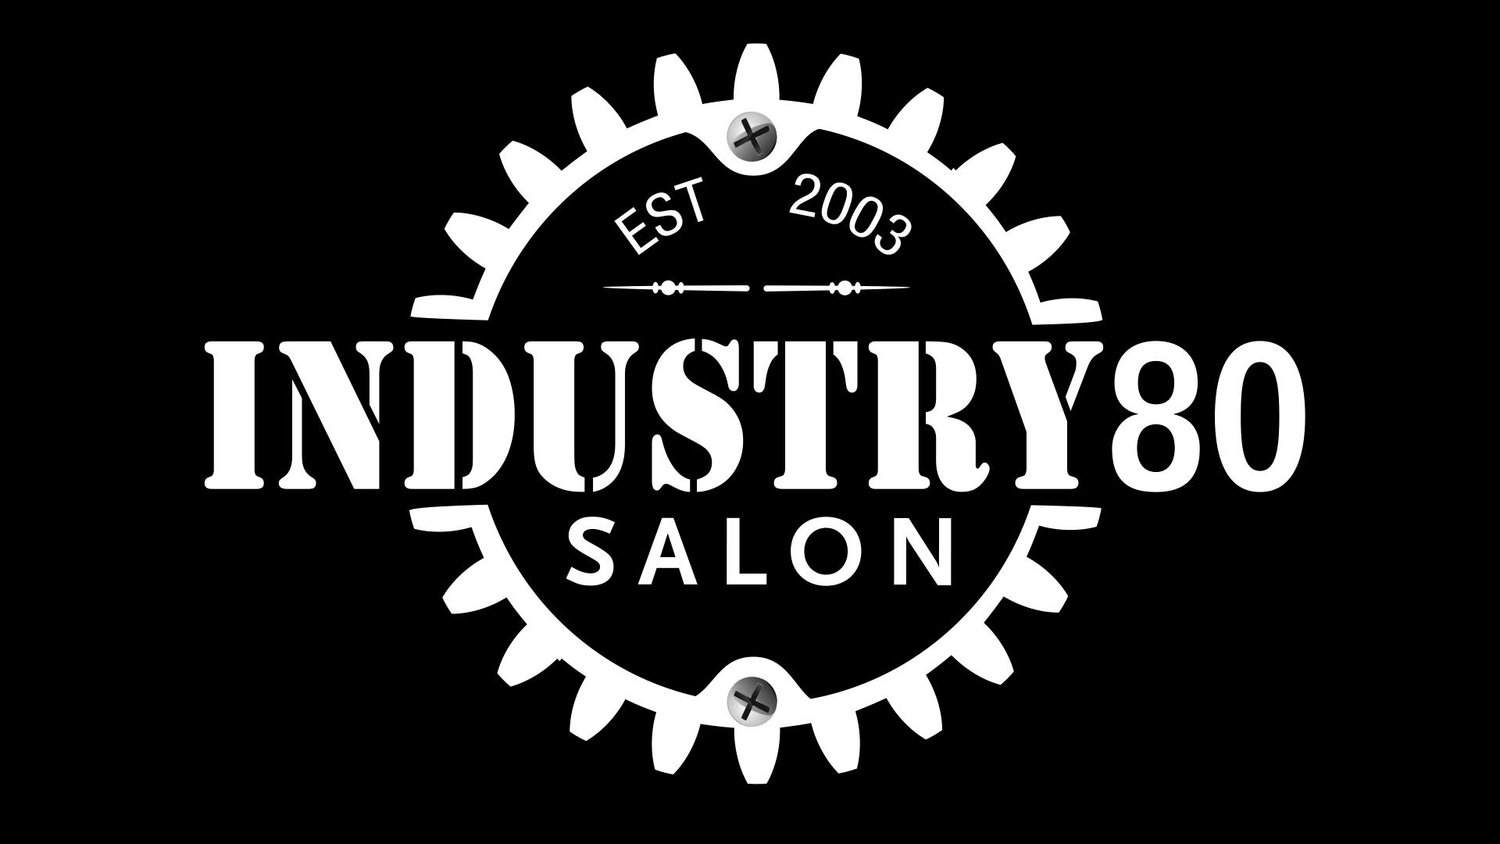 Industry 80 Salon